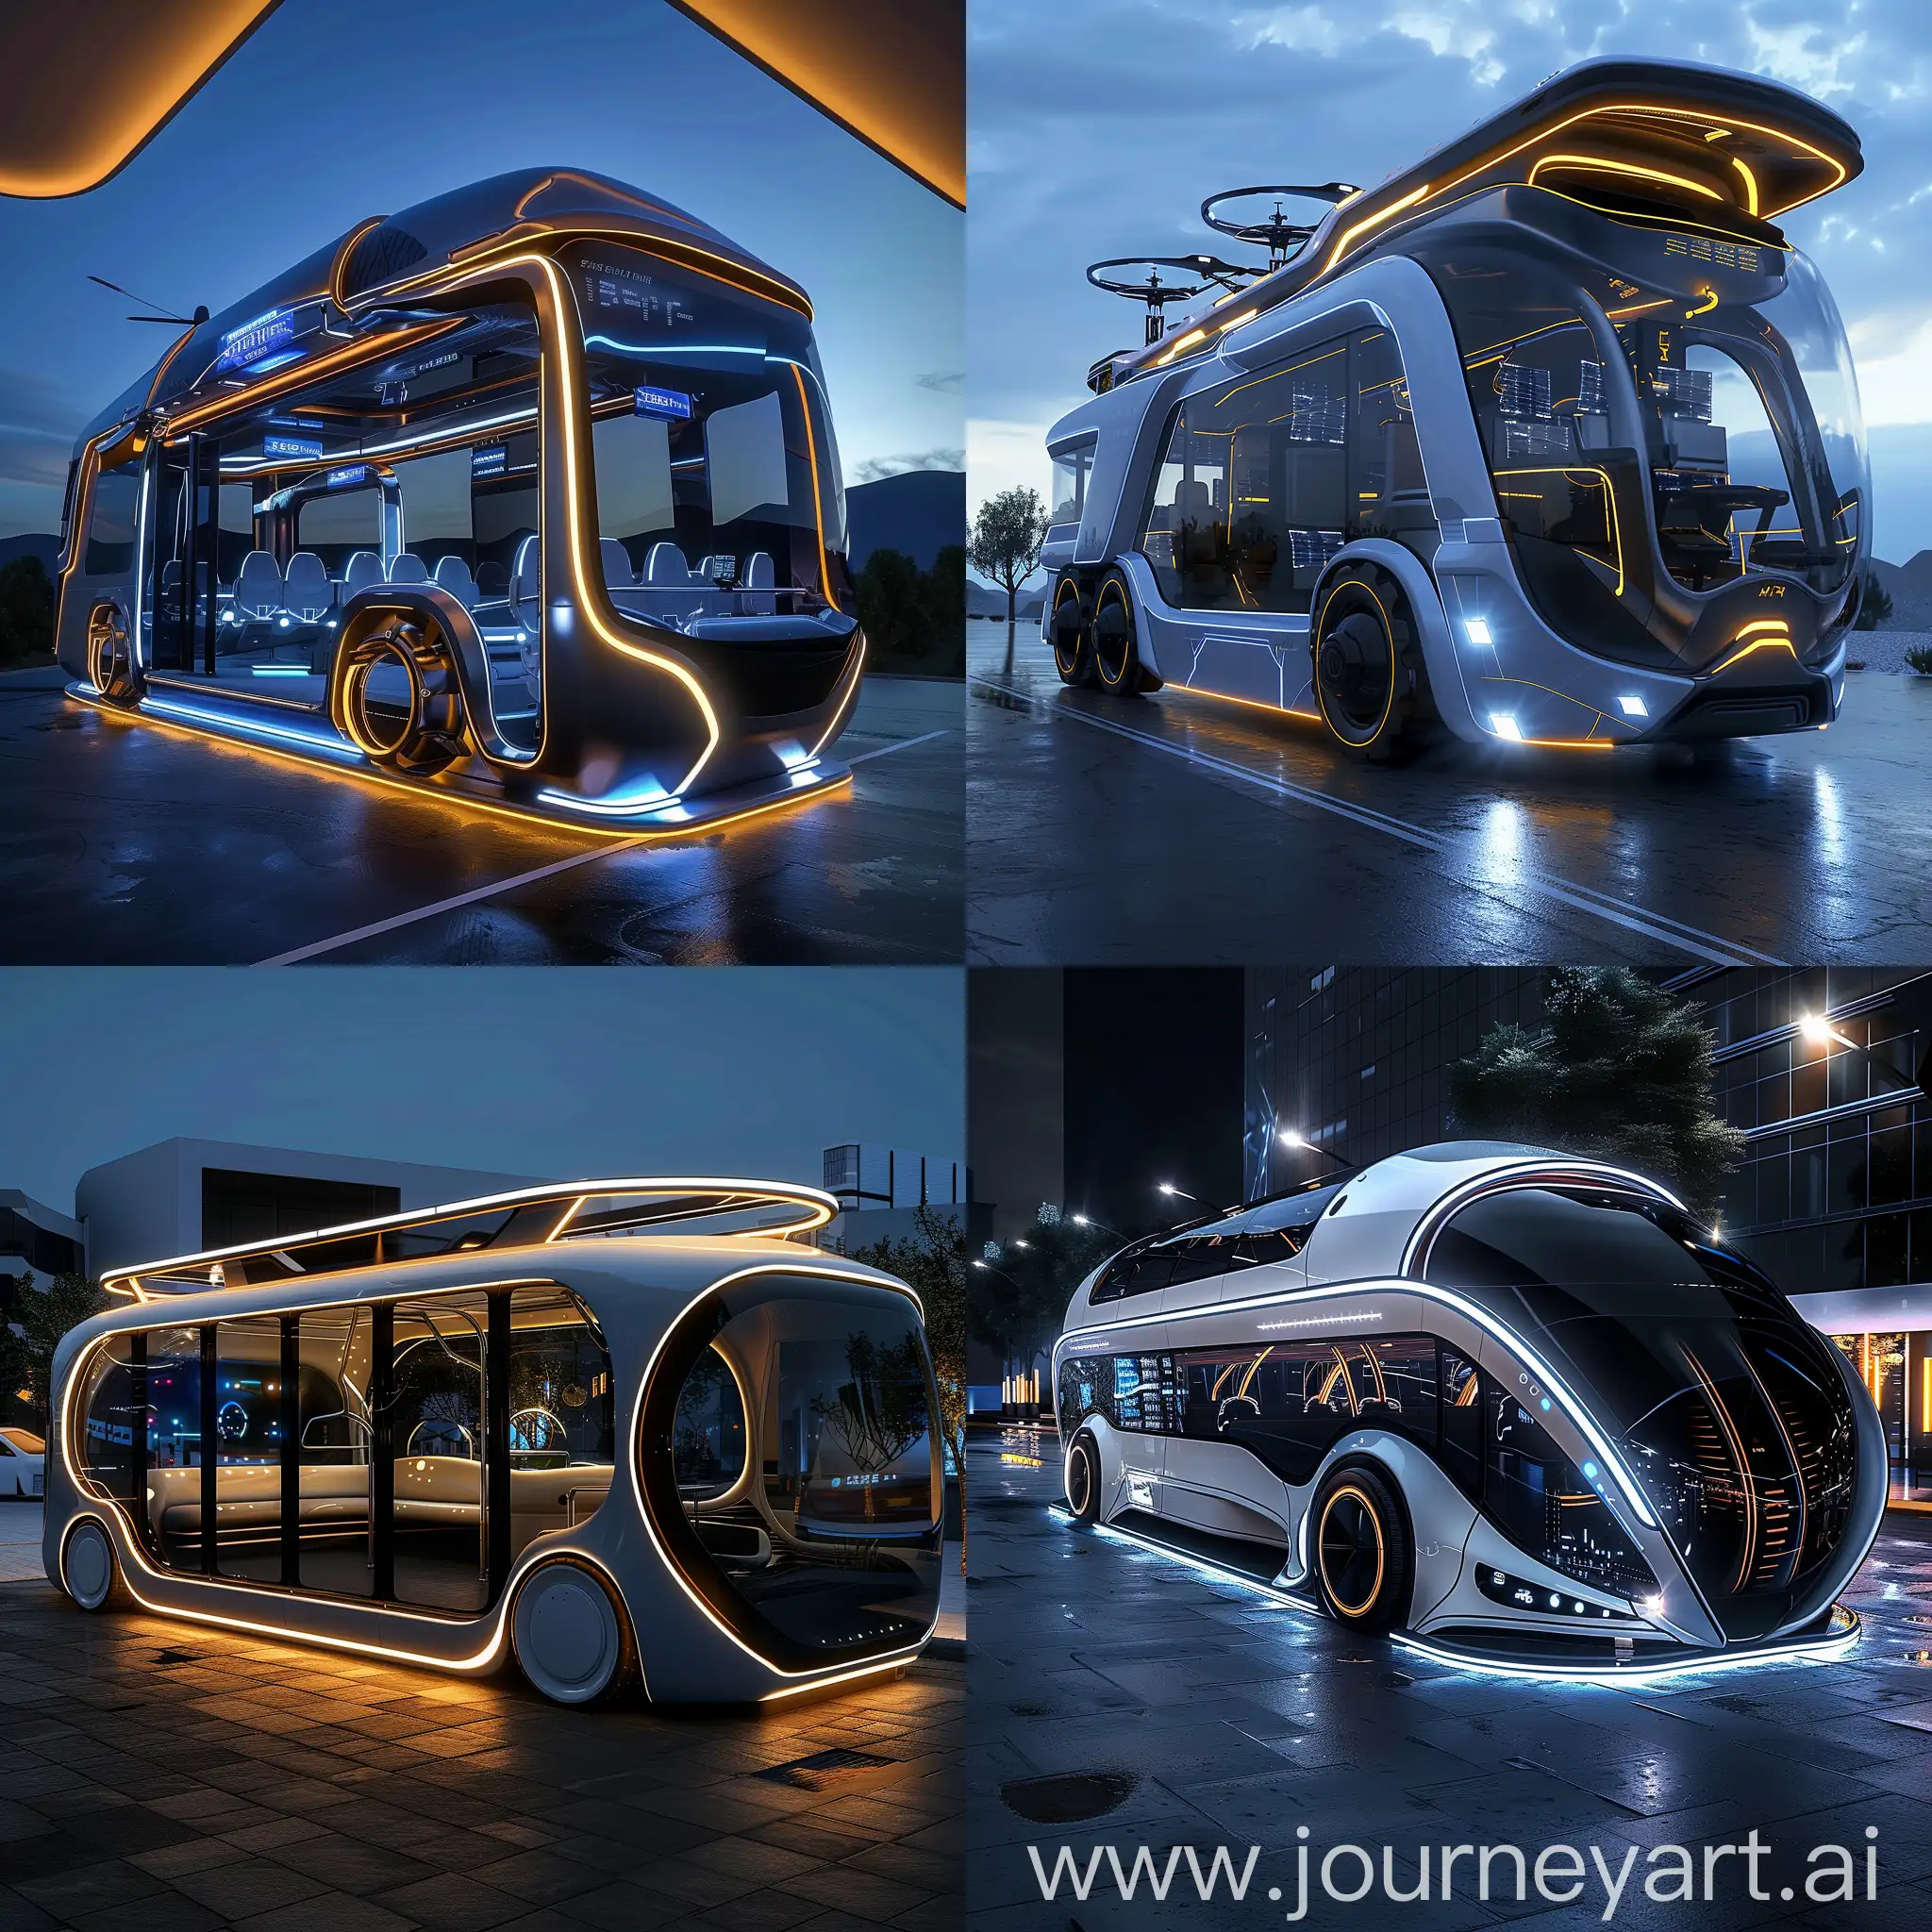 Futuristic-SciFi-Bus-with-Advanced-Technology-and-Autonomous-Features